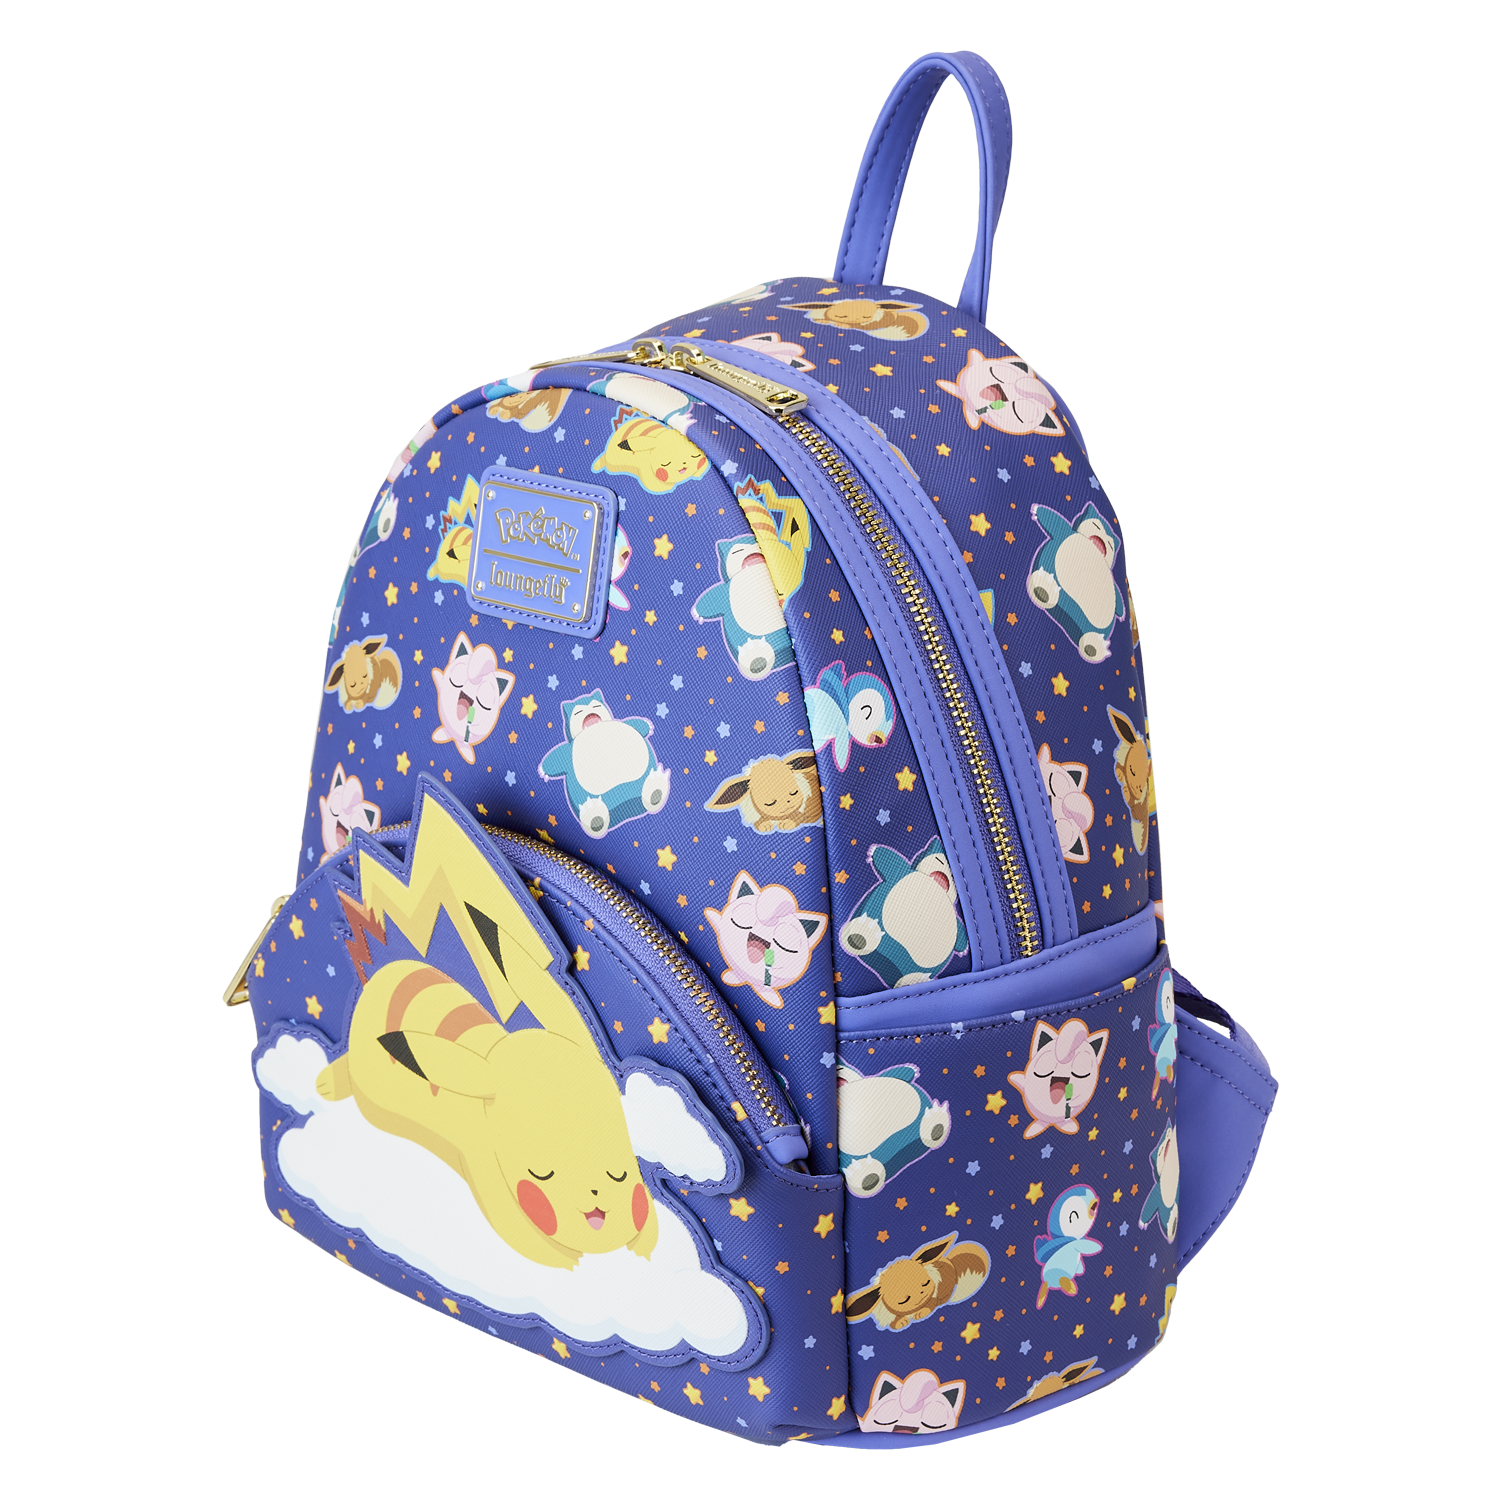 Pokemon Pikachu Mini Backpack